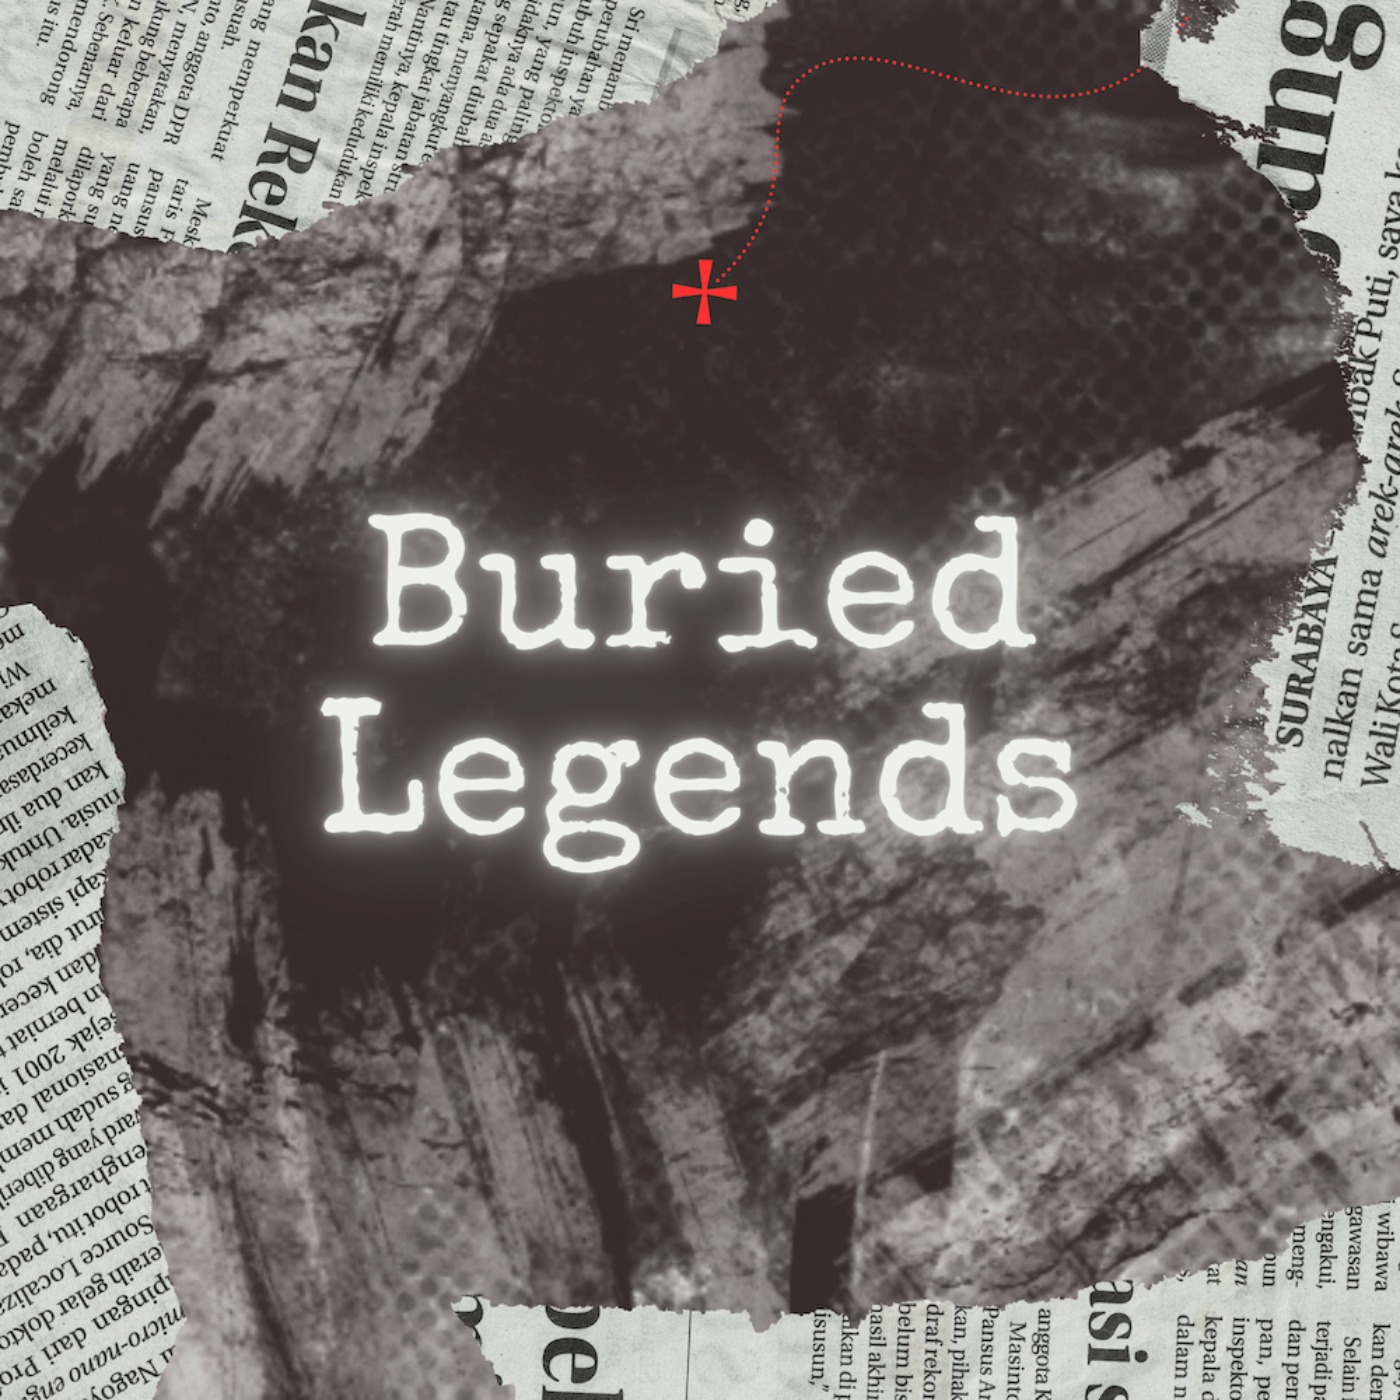 Buried Legends podcast show image